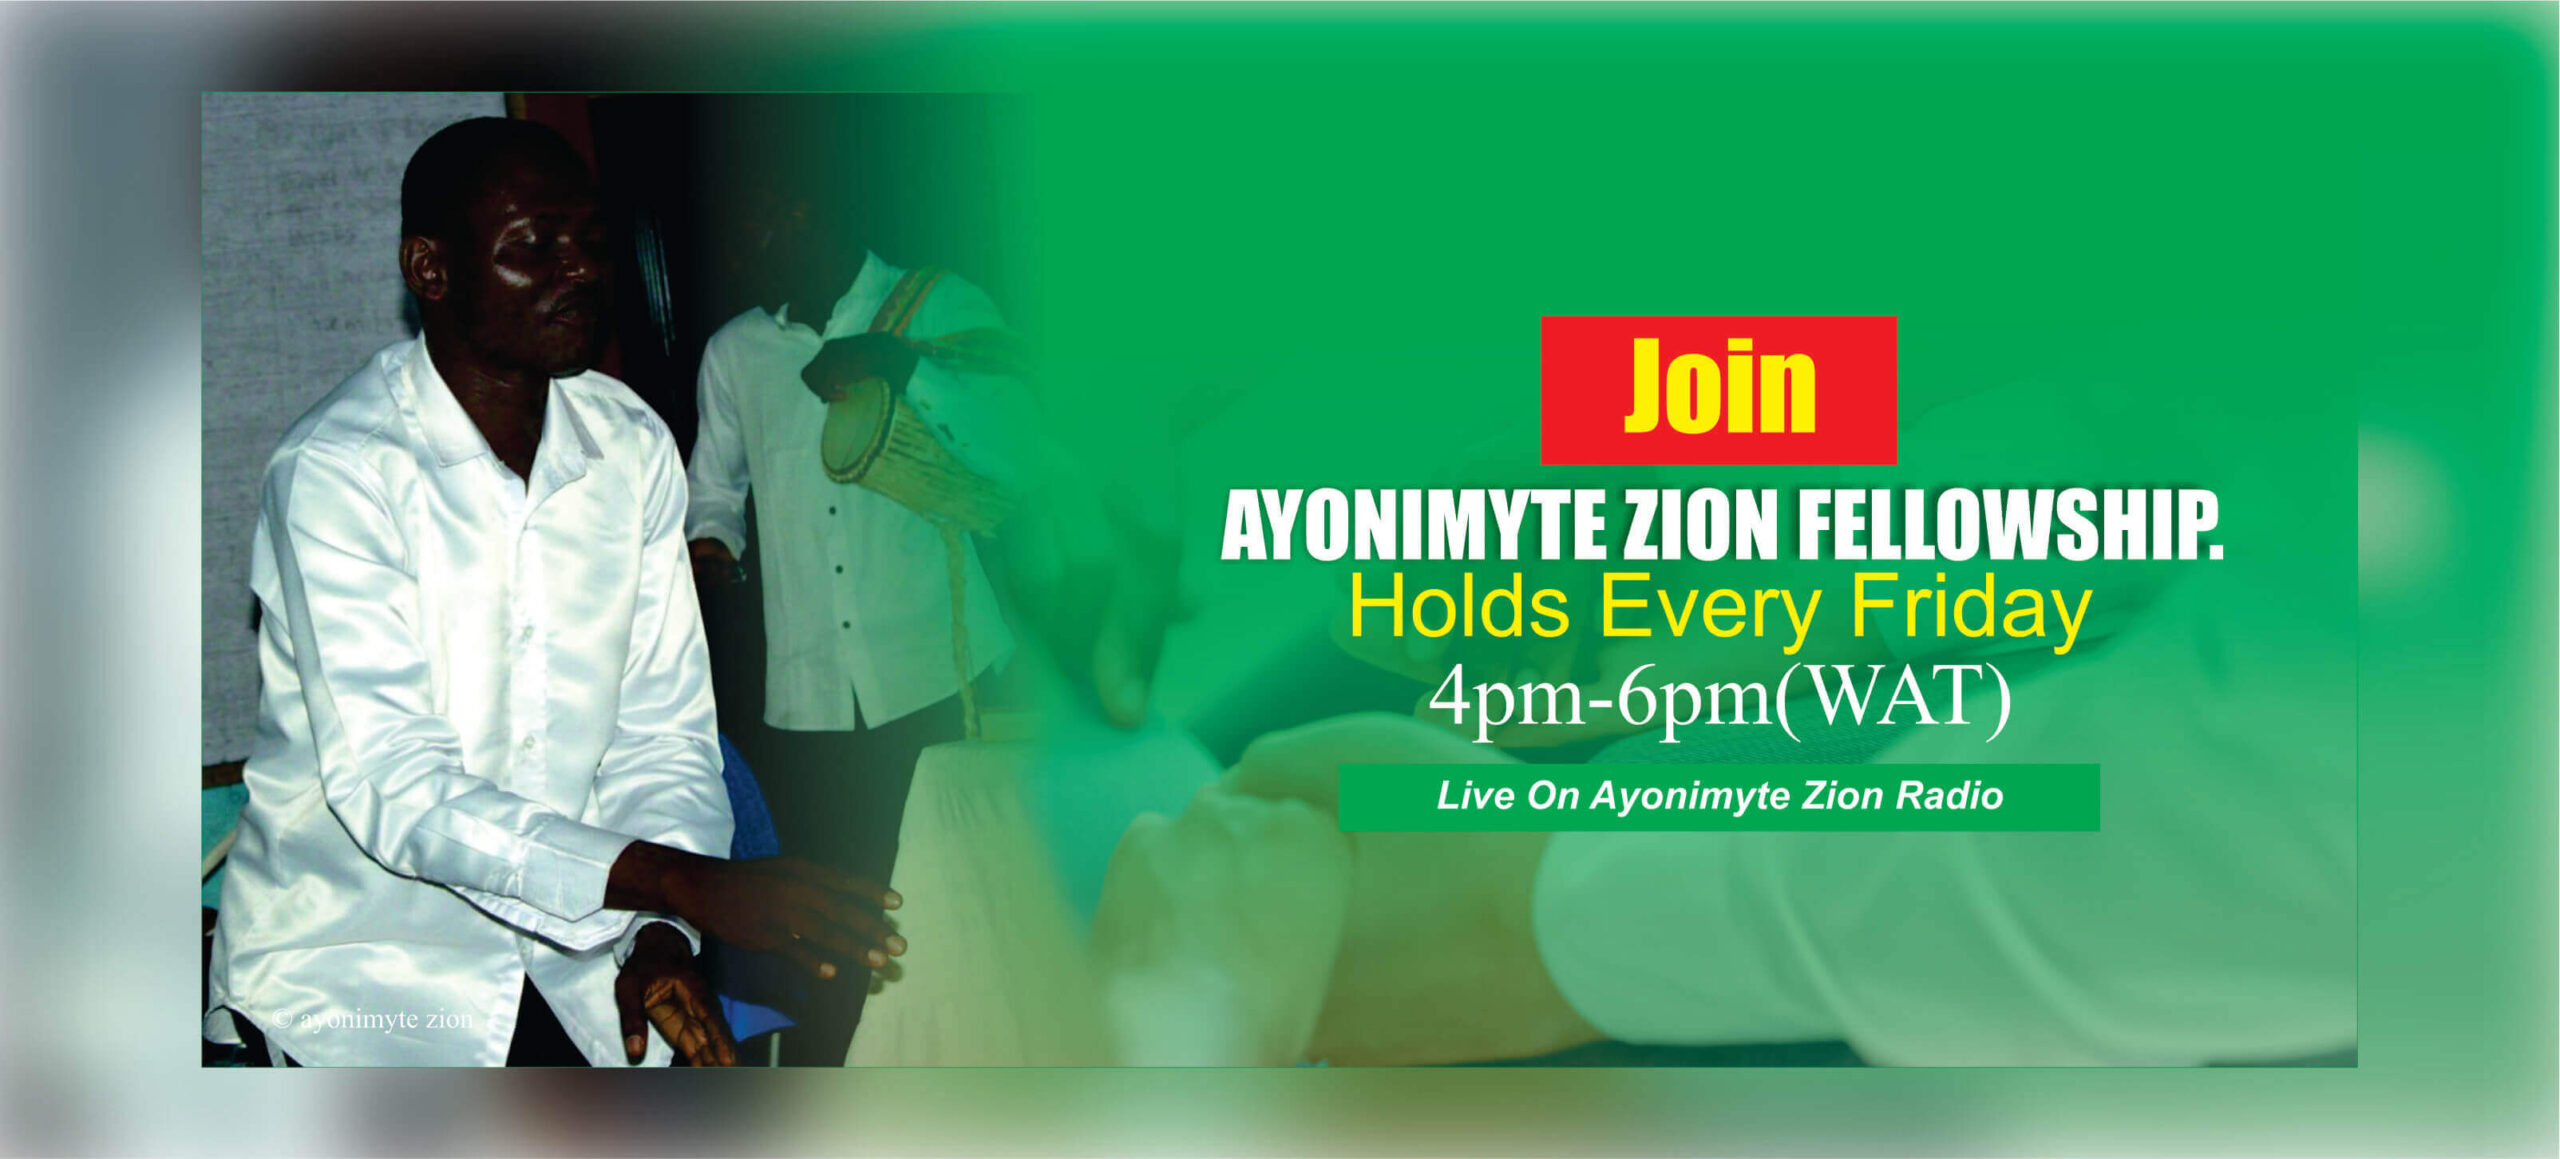 Ayonimyte Zion Fellowship